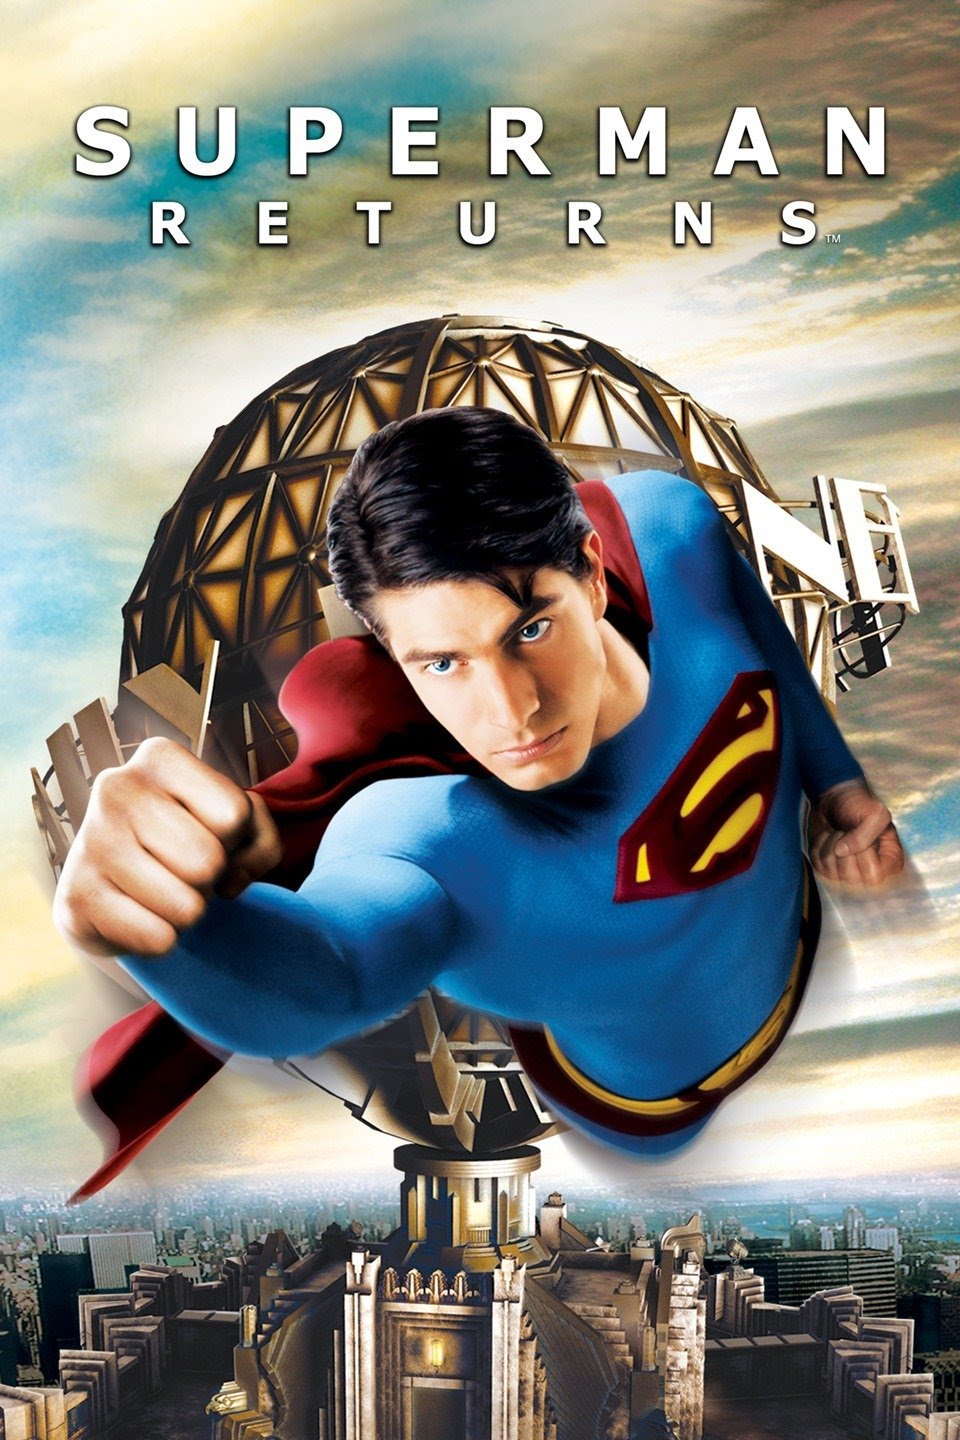 [MINI-HD] Superman Returns (2006) ซูเปอร์แมน รีเทิร์น ภาค 5 [1080p] [พากย์ไทย 5.1 + เสียงอังกฤษ DTS] [บรรยายไทย + อังกฤษ] [เสียงไทย + ซับไทย] [DOSYAUPLOAD]